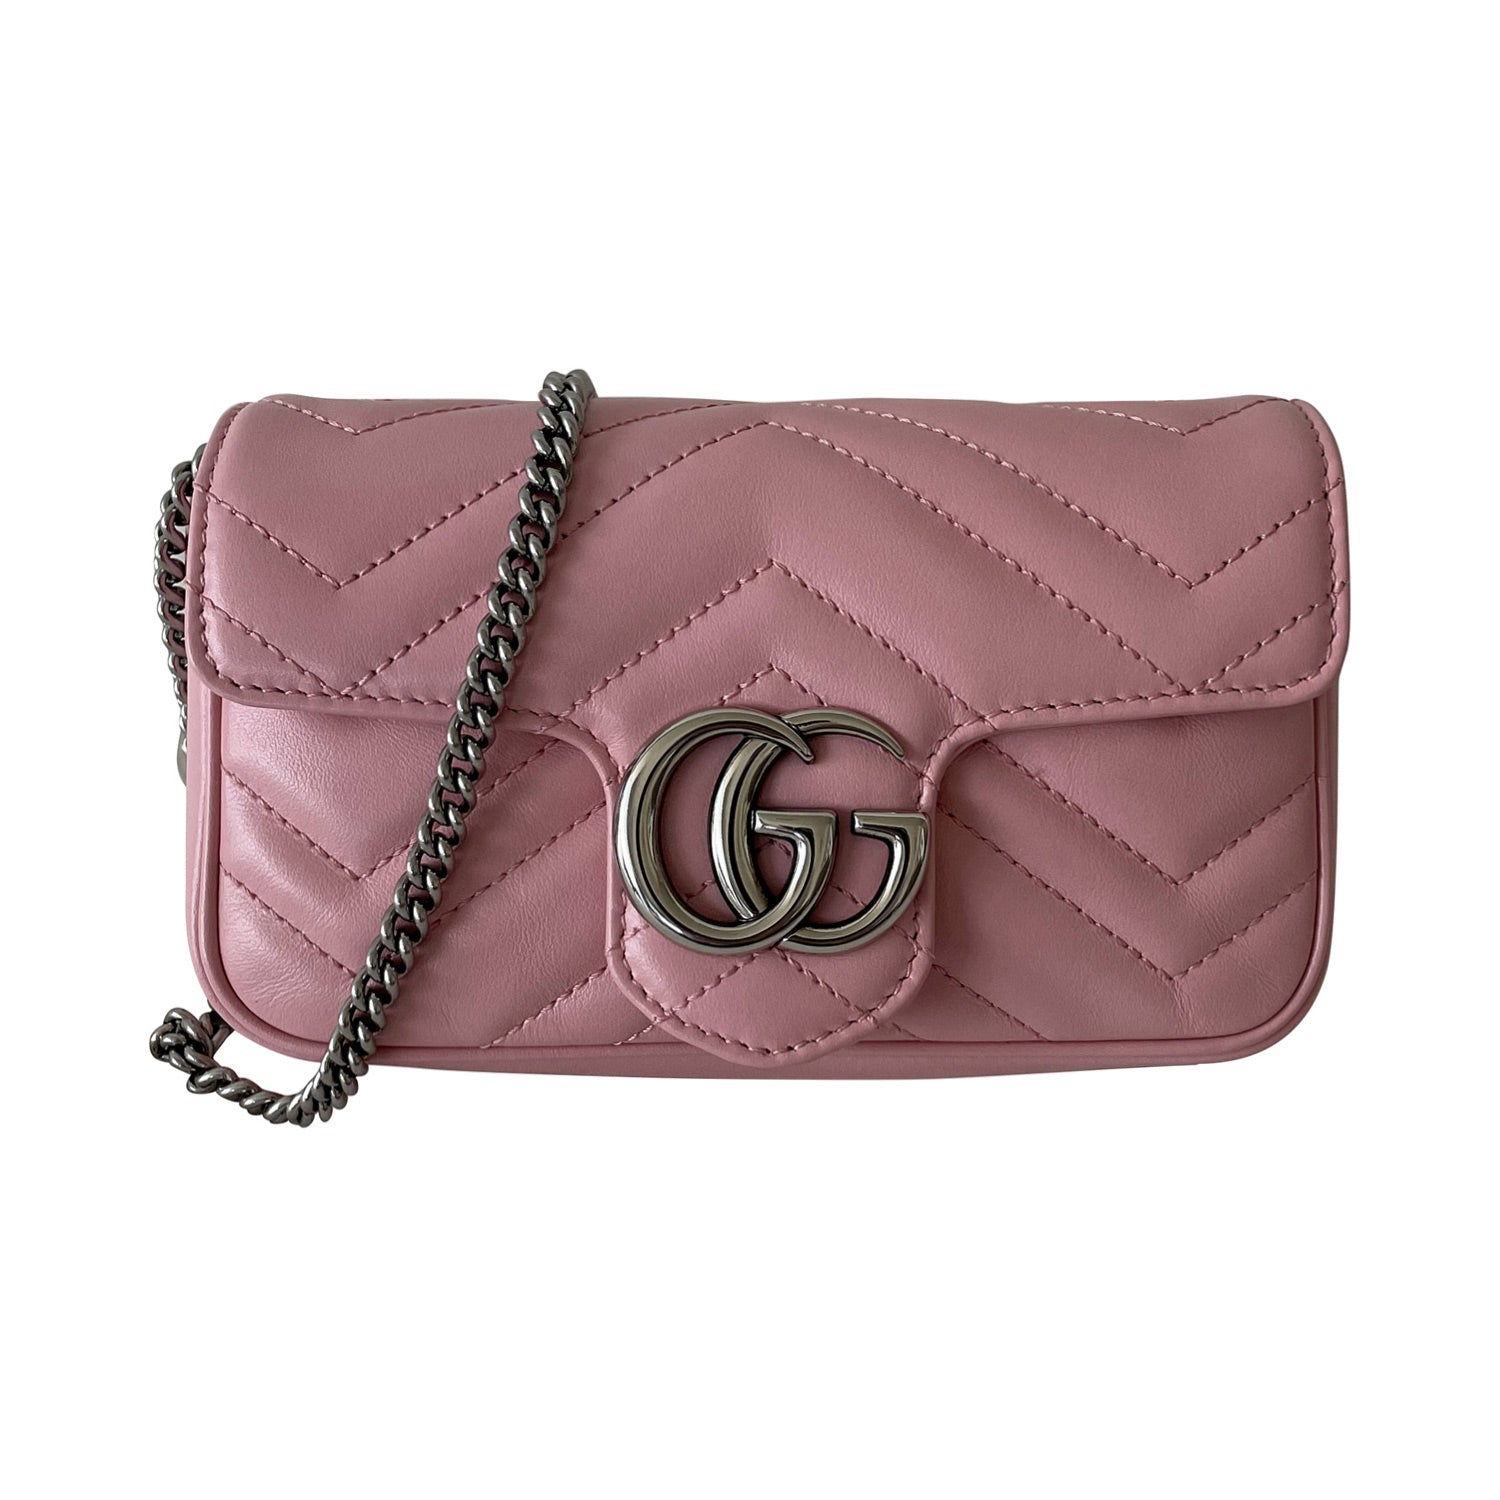 Shop authentic Gucci GG Marmont Matelassé Super Mini Bag at revogue for  just USD 875.00